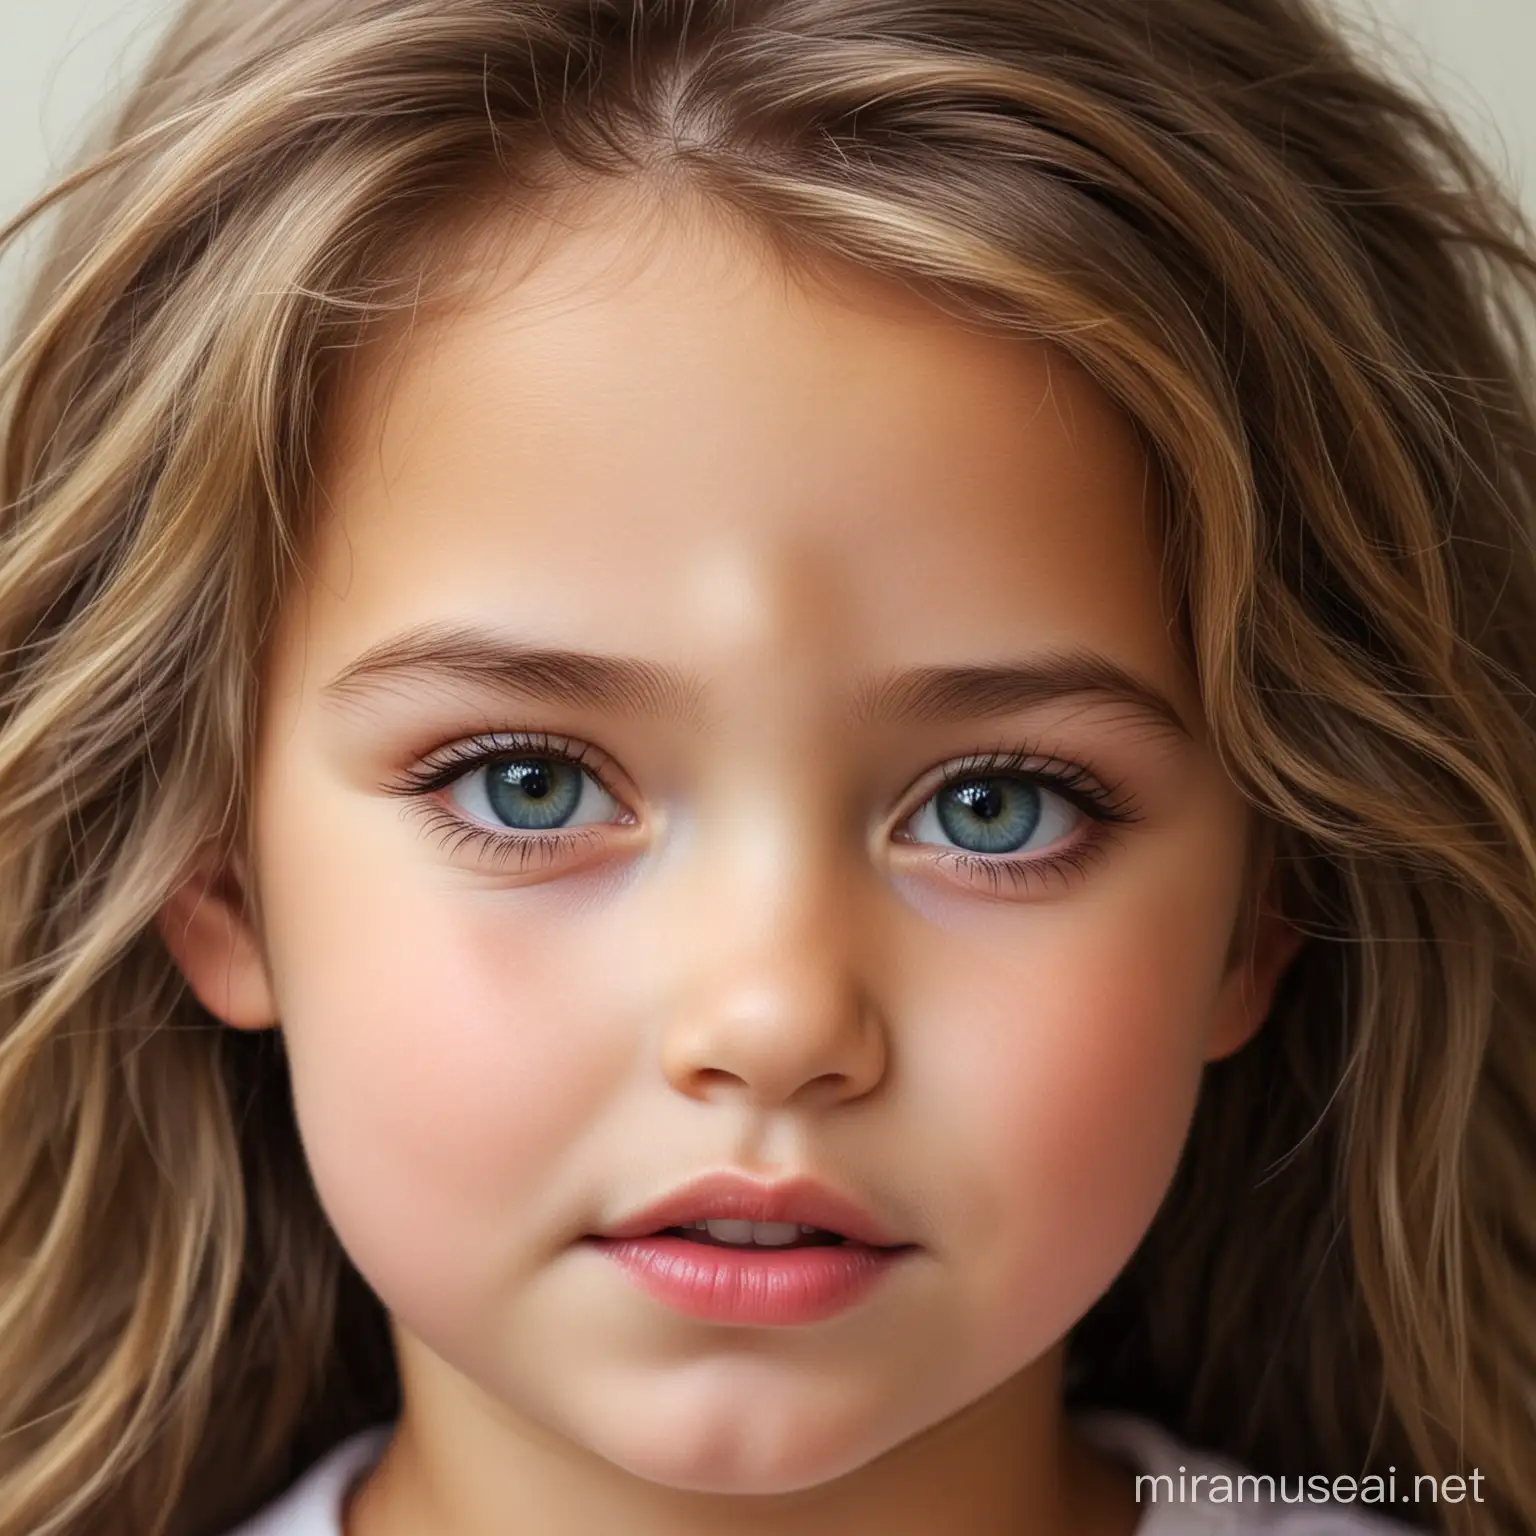 Innocent Beauty A Radiant Childs Portrait